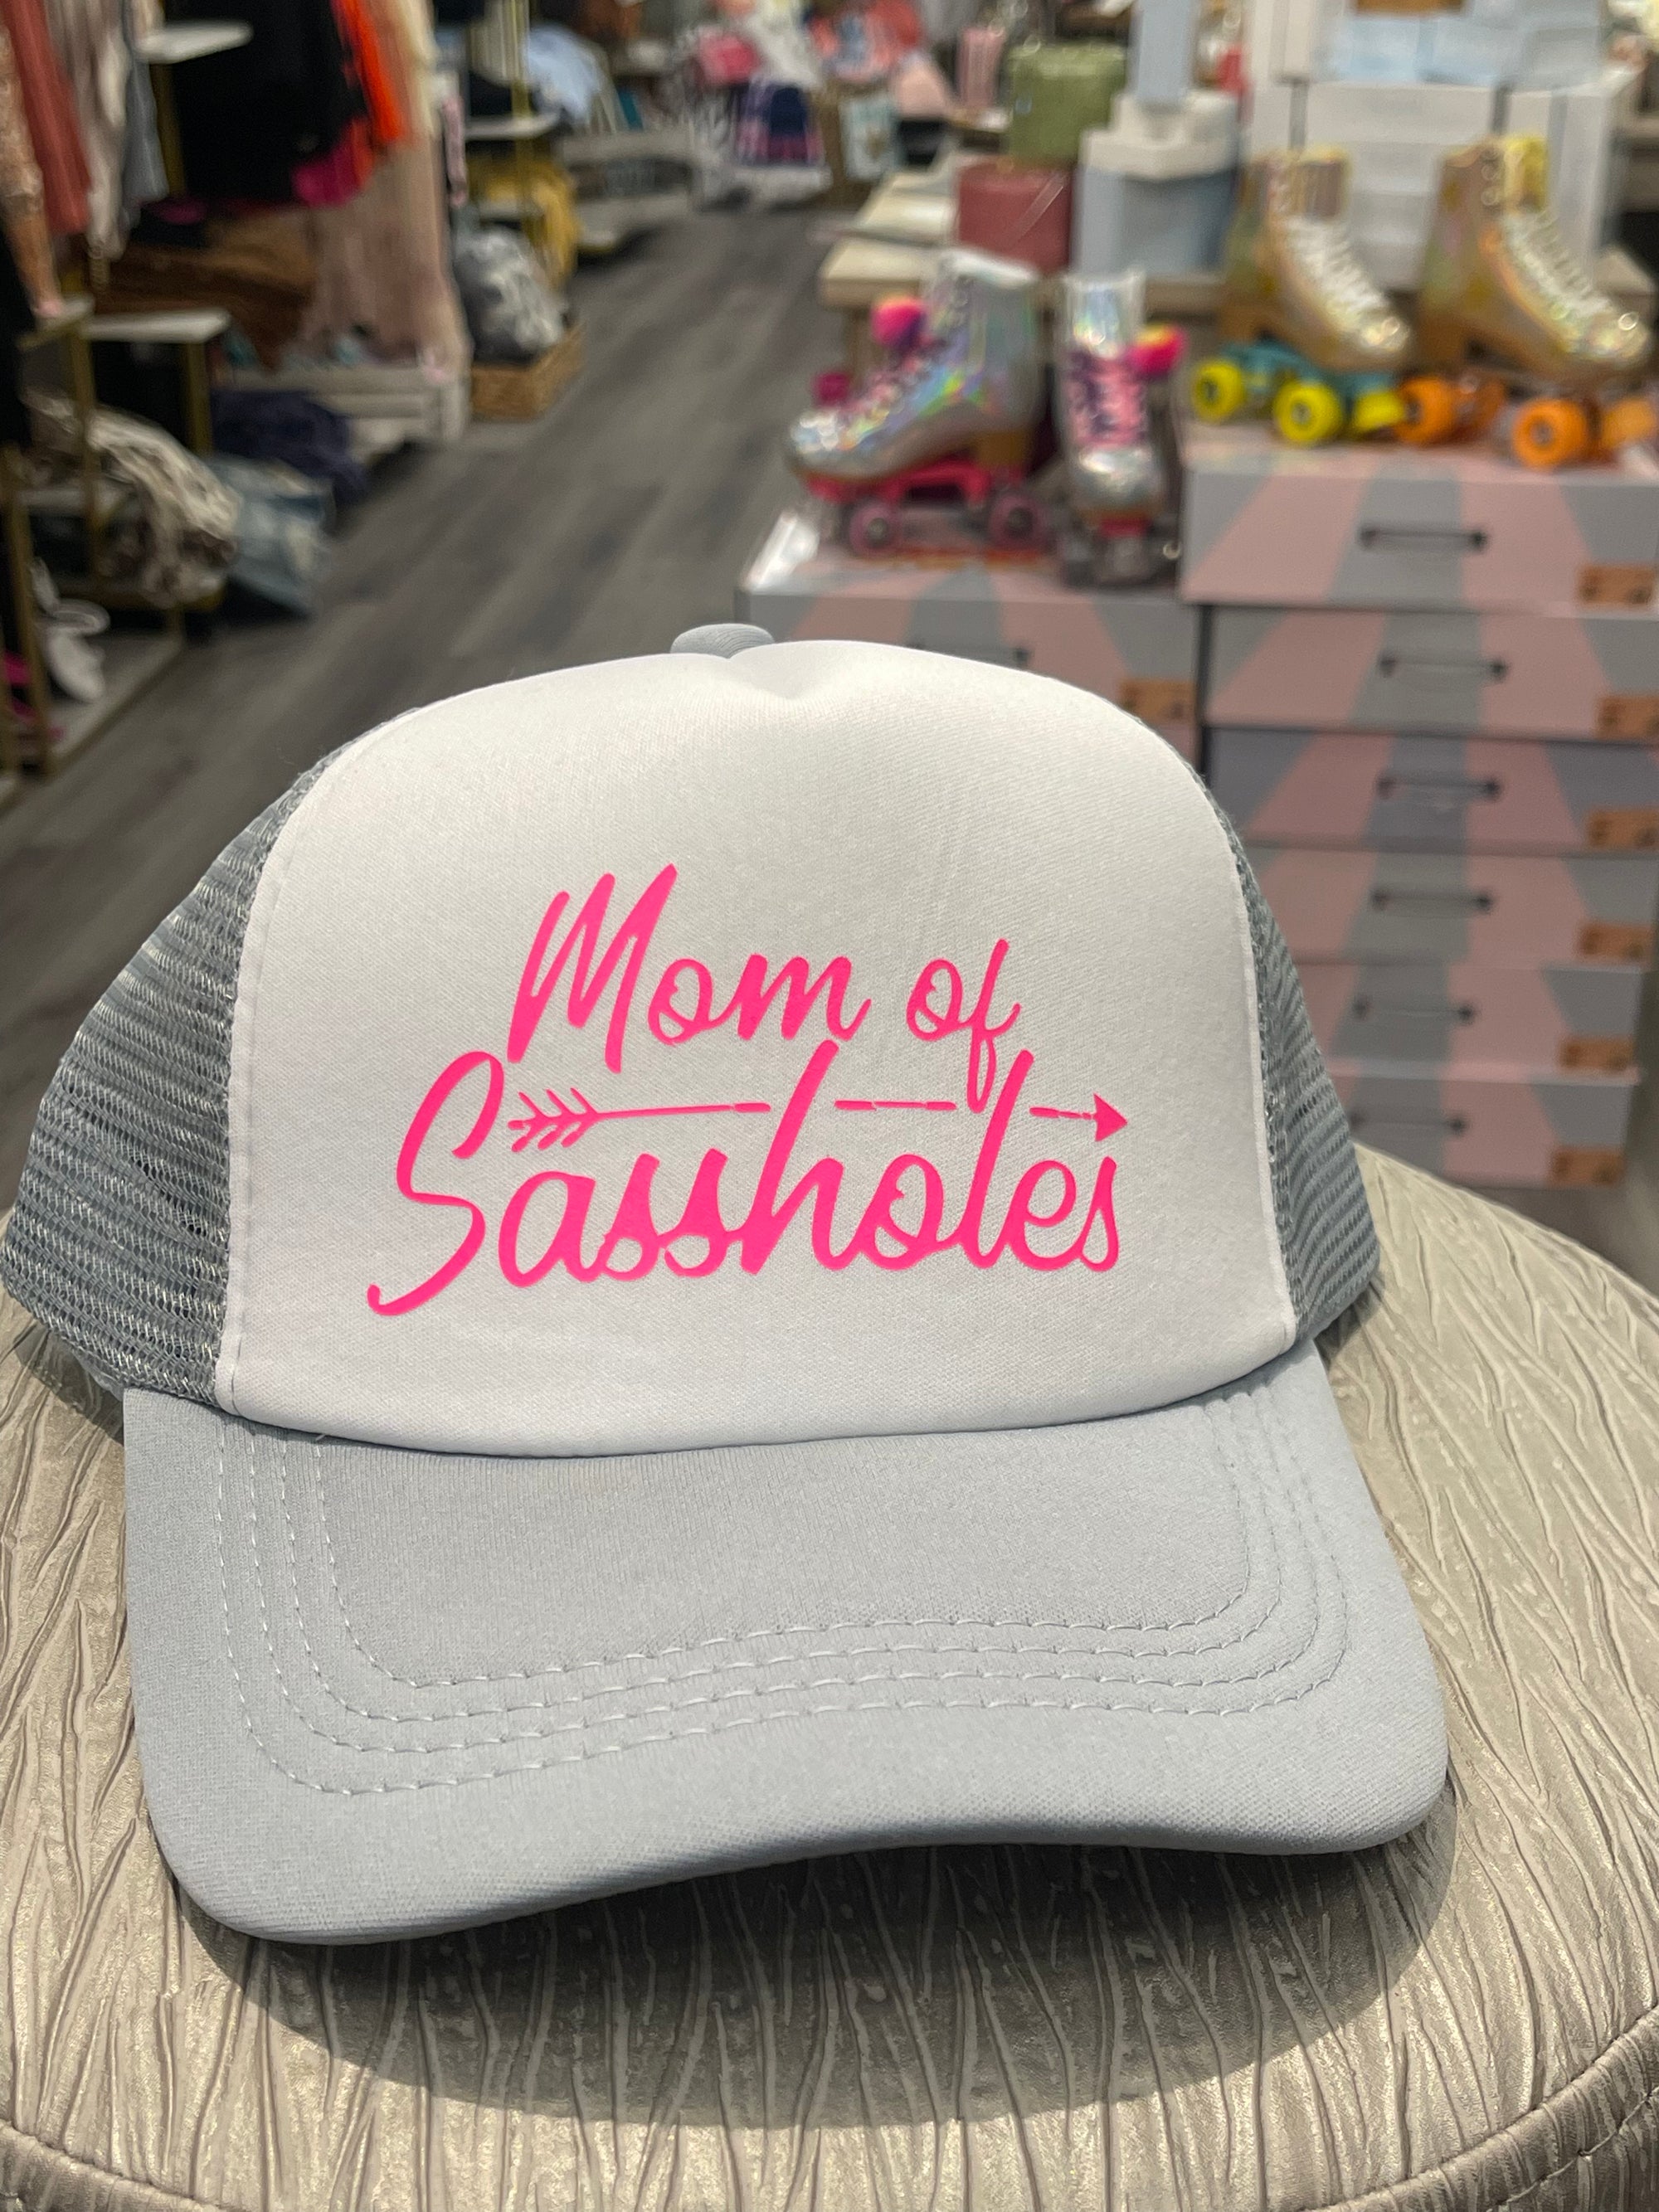 Mom of SassHoles Trucker Hat